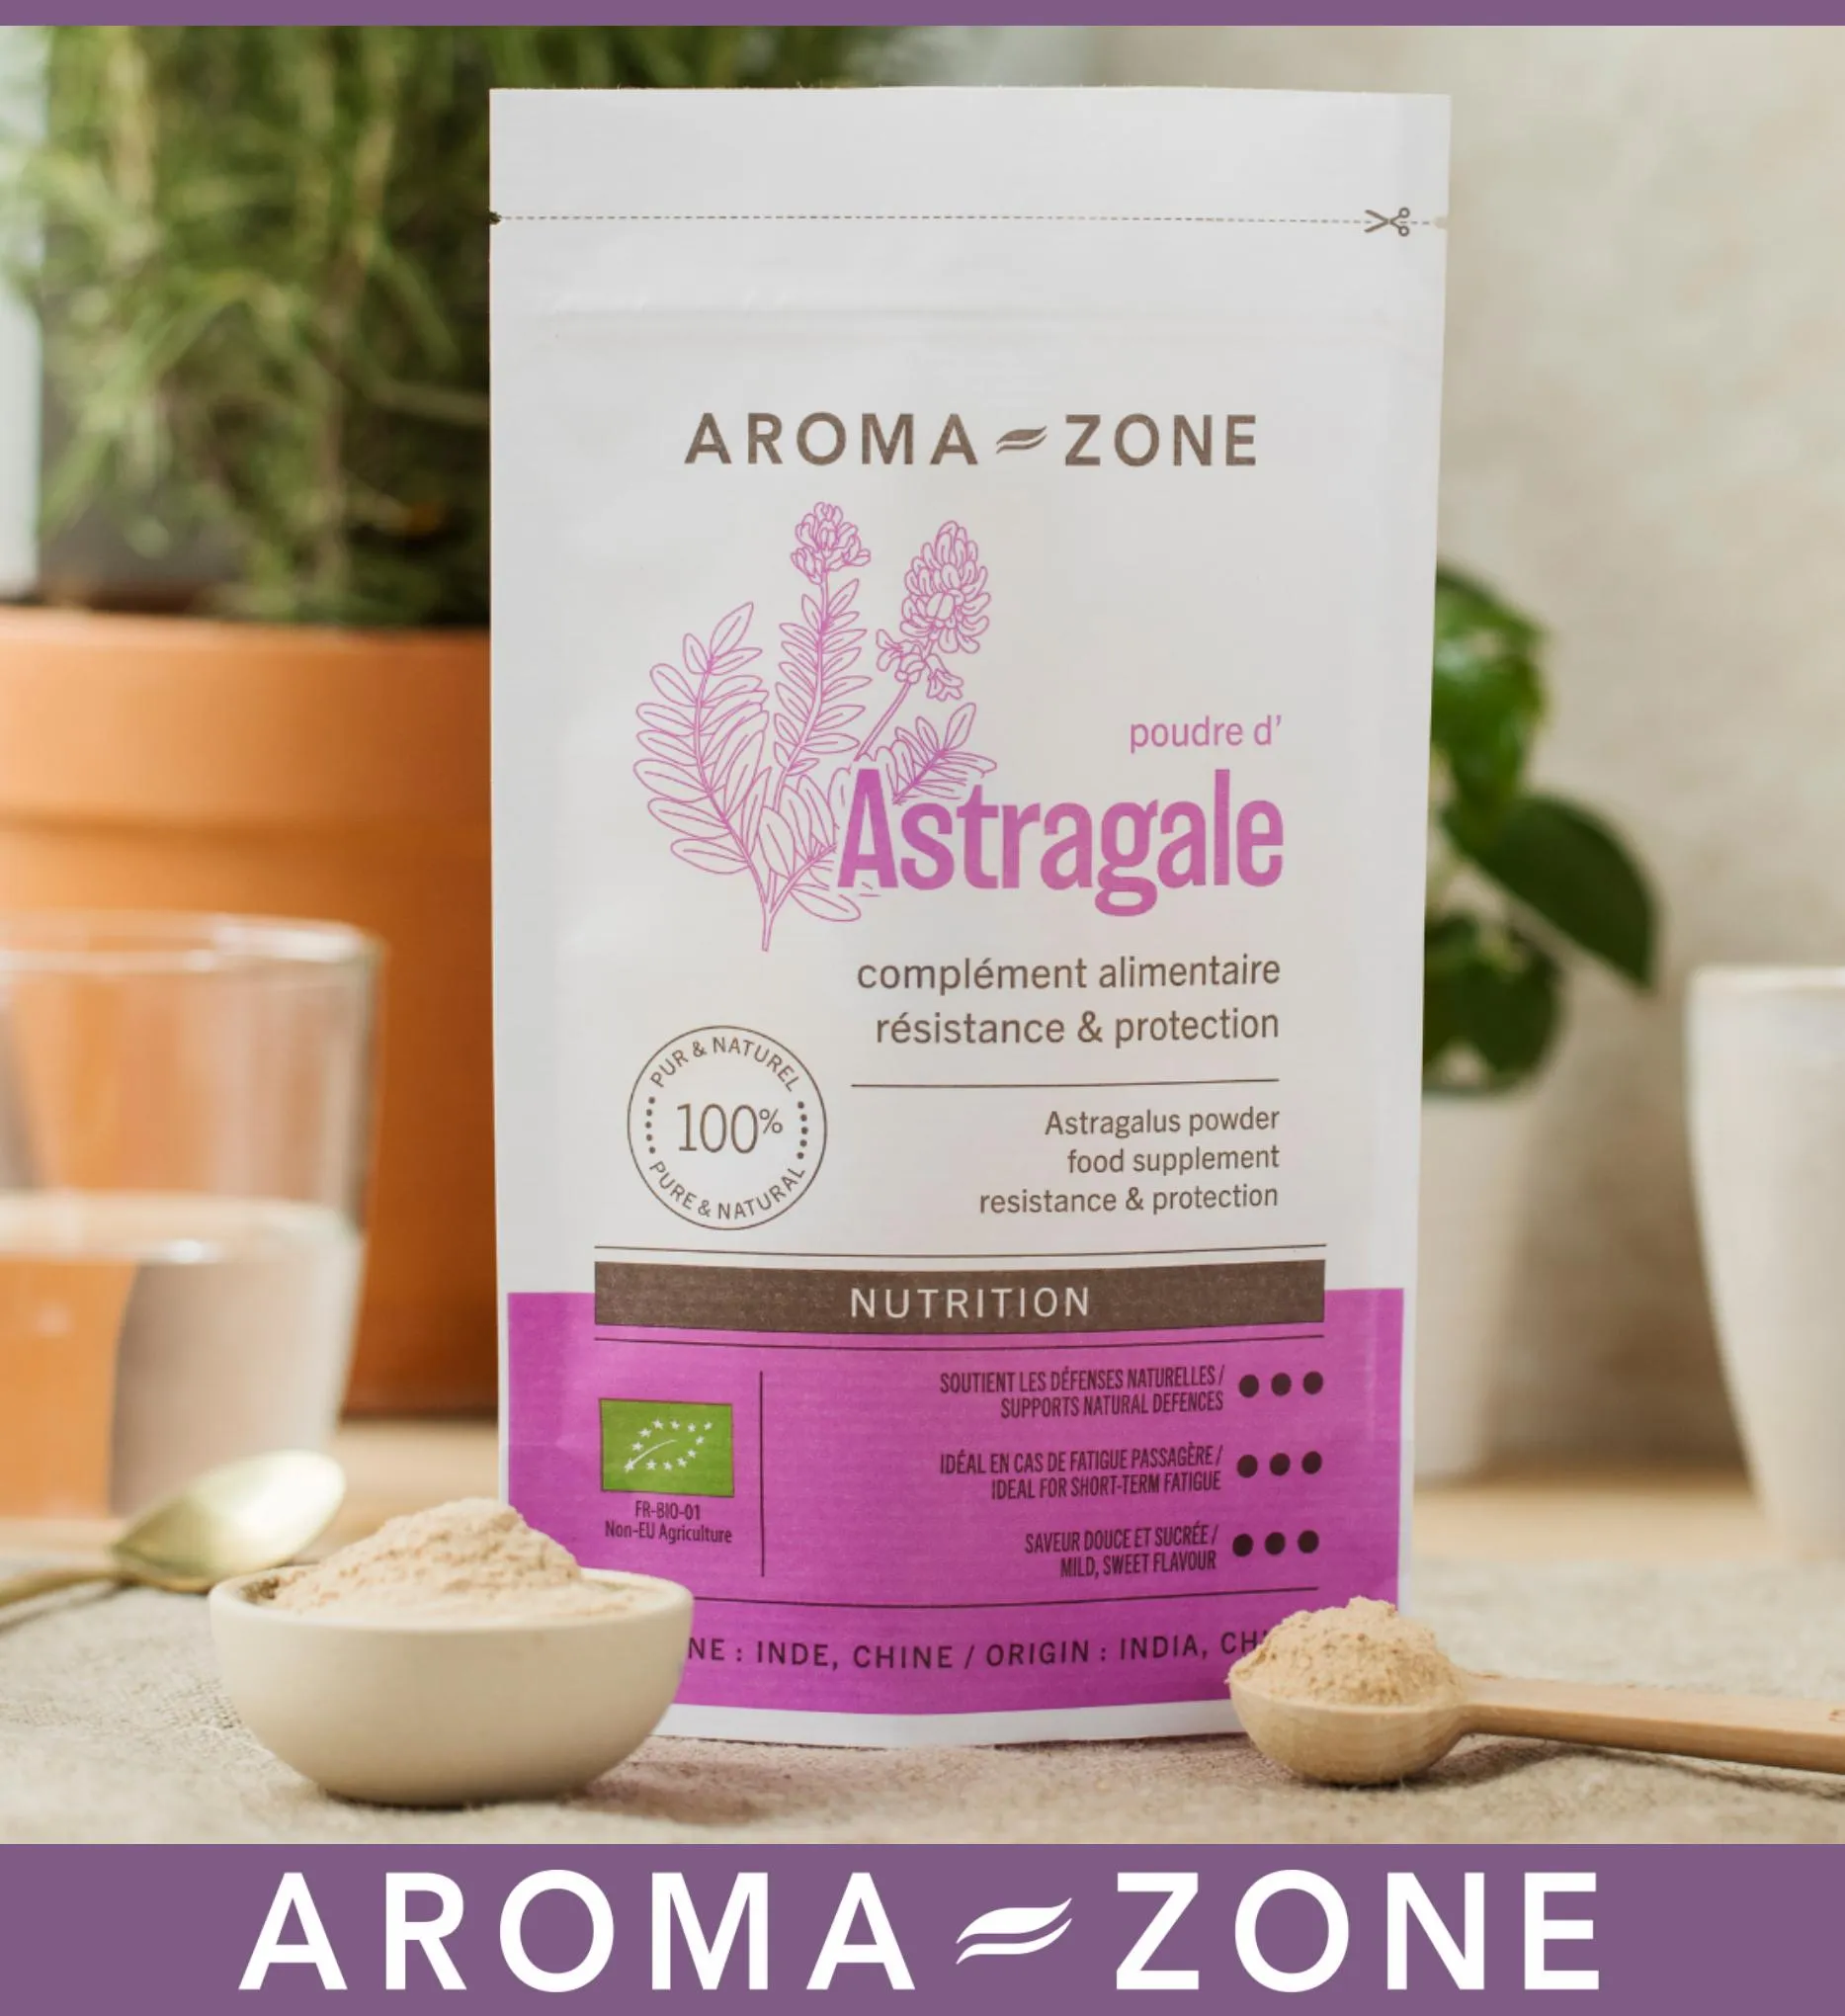 Catalogue Aroma Zone Promos, page 00010